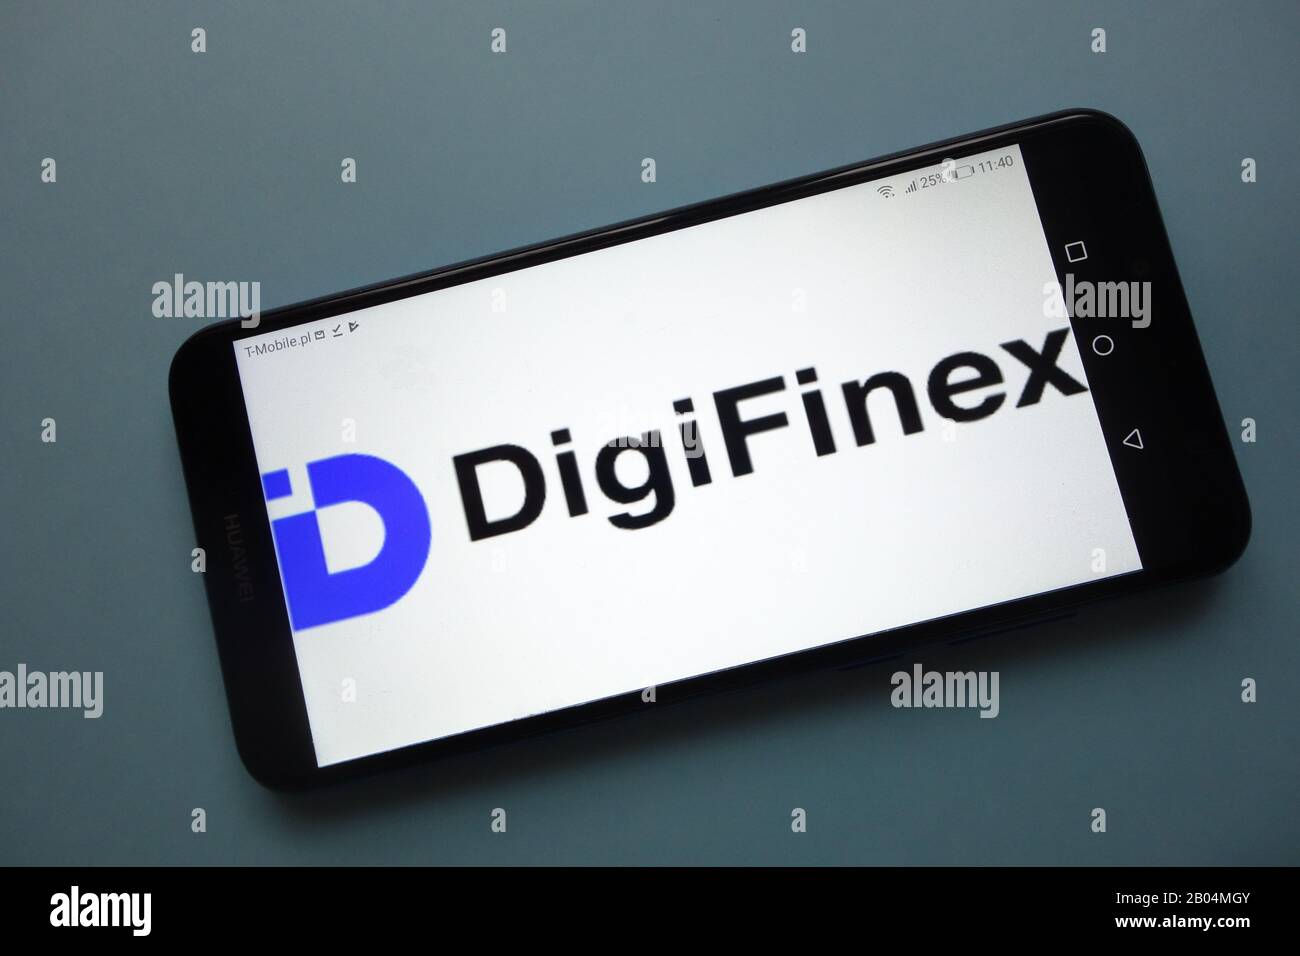 DigiFinex cryptocurrency exchange logo displayed on smartphone Stock Photo